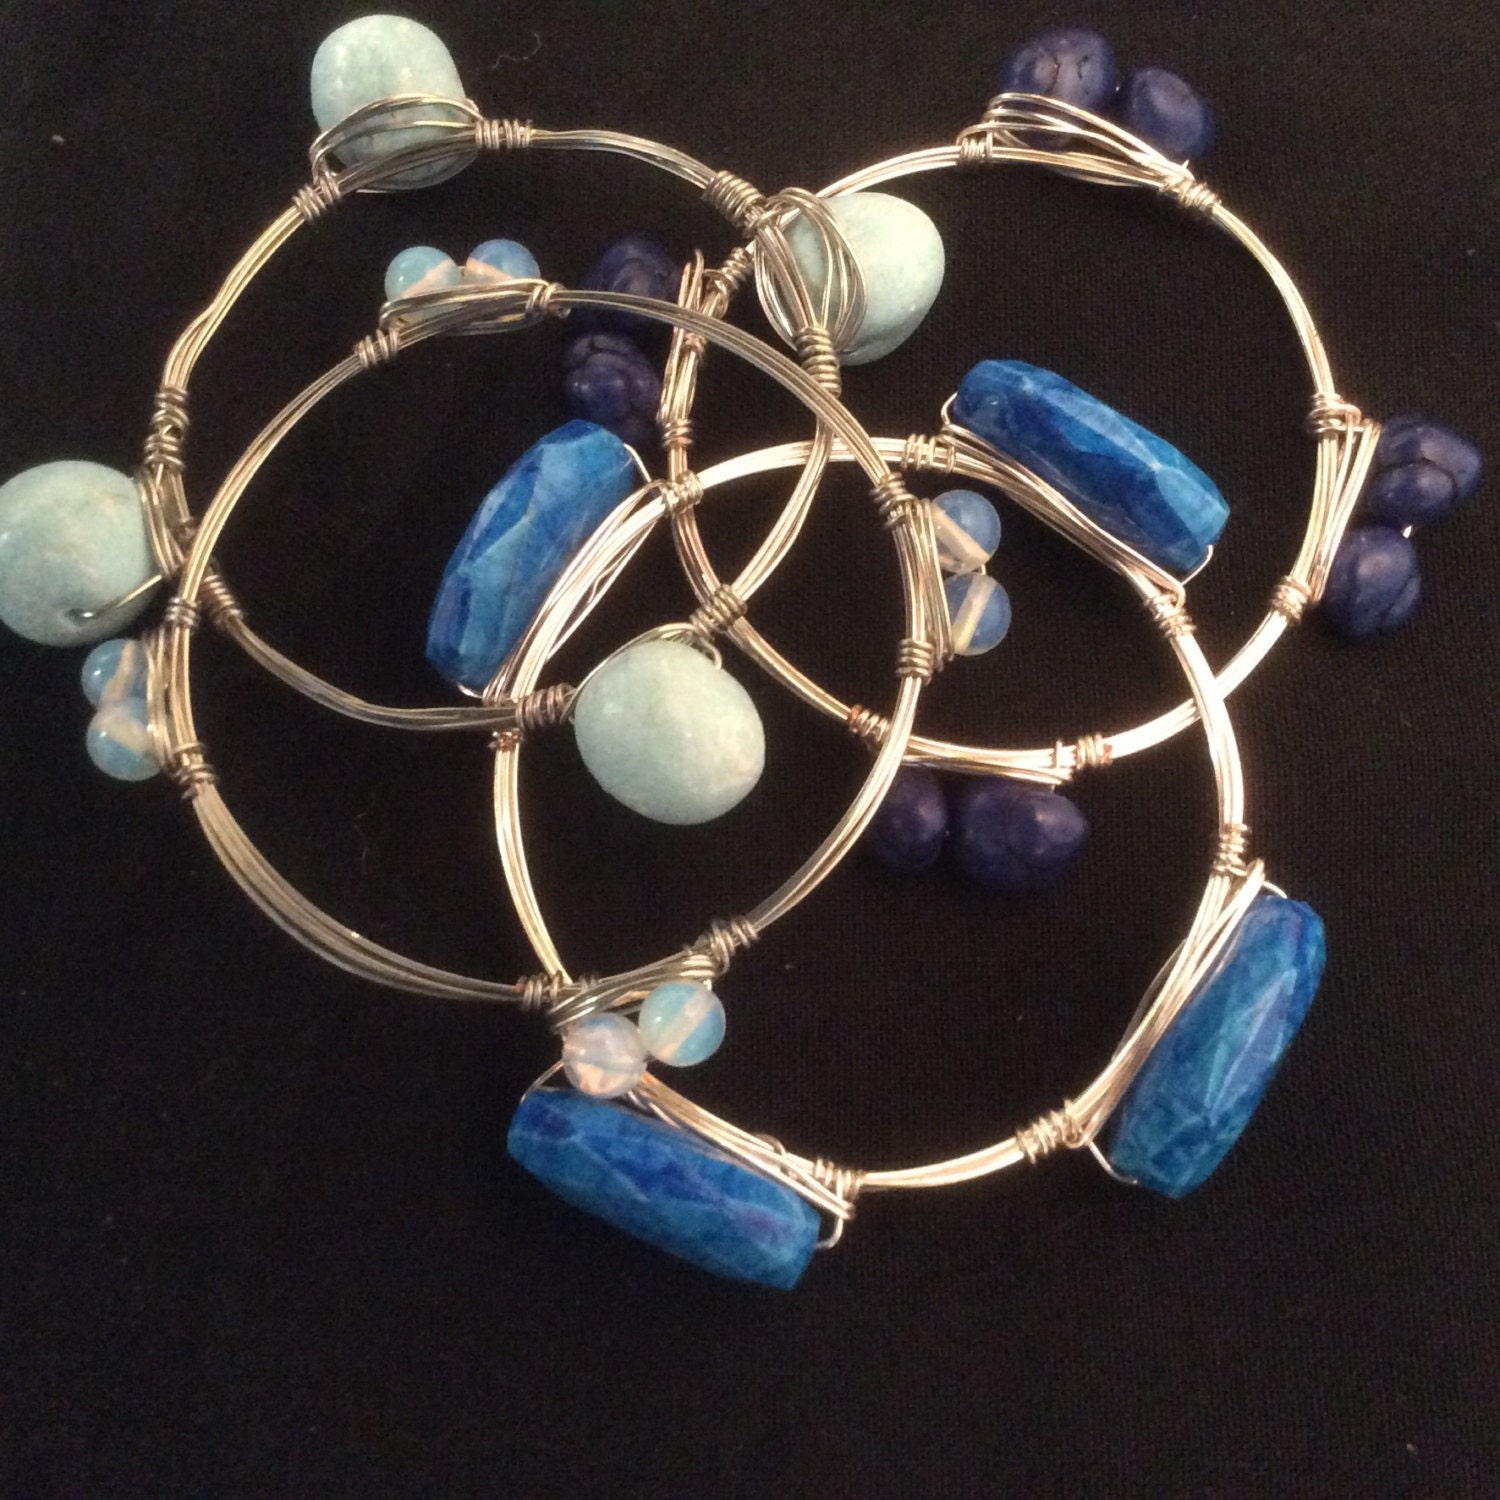 Handmade wire wrap bracelets-set of 4 by JoeLinaDesigns on Etsy